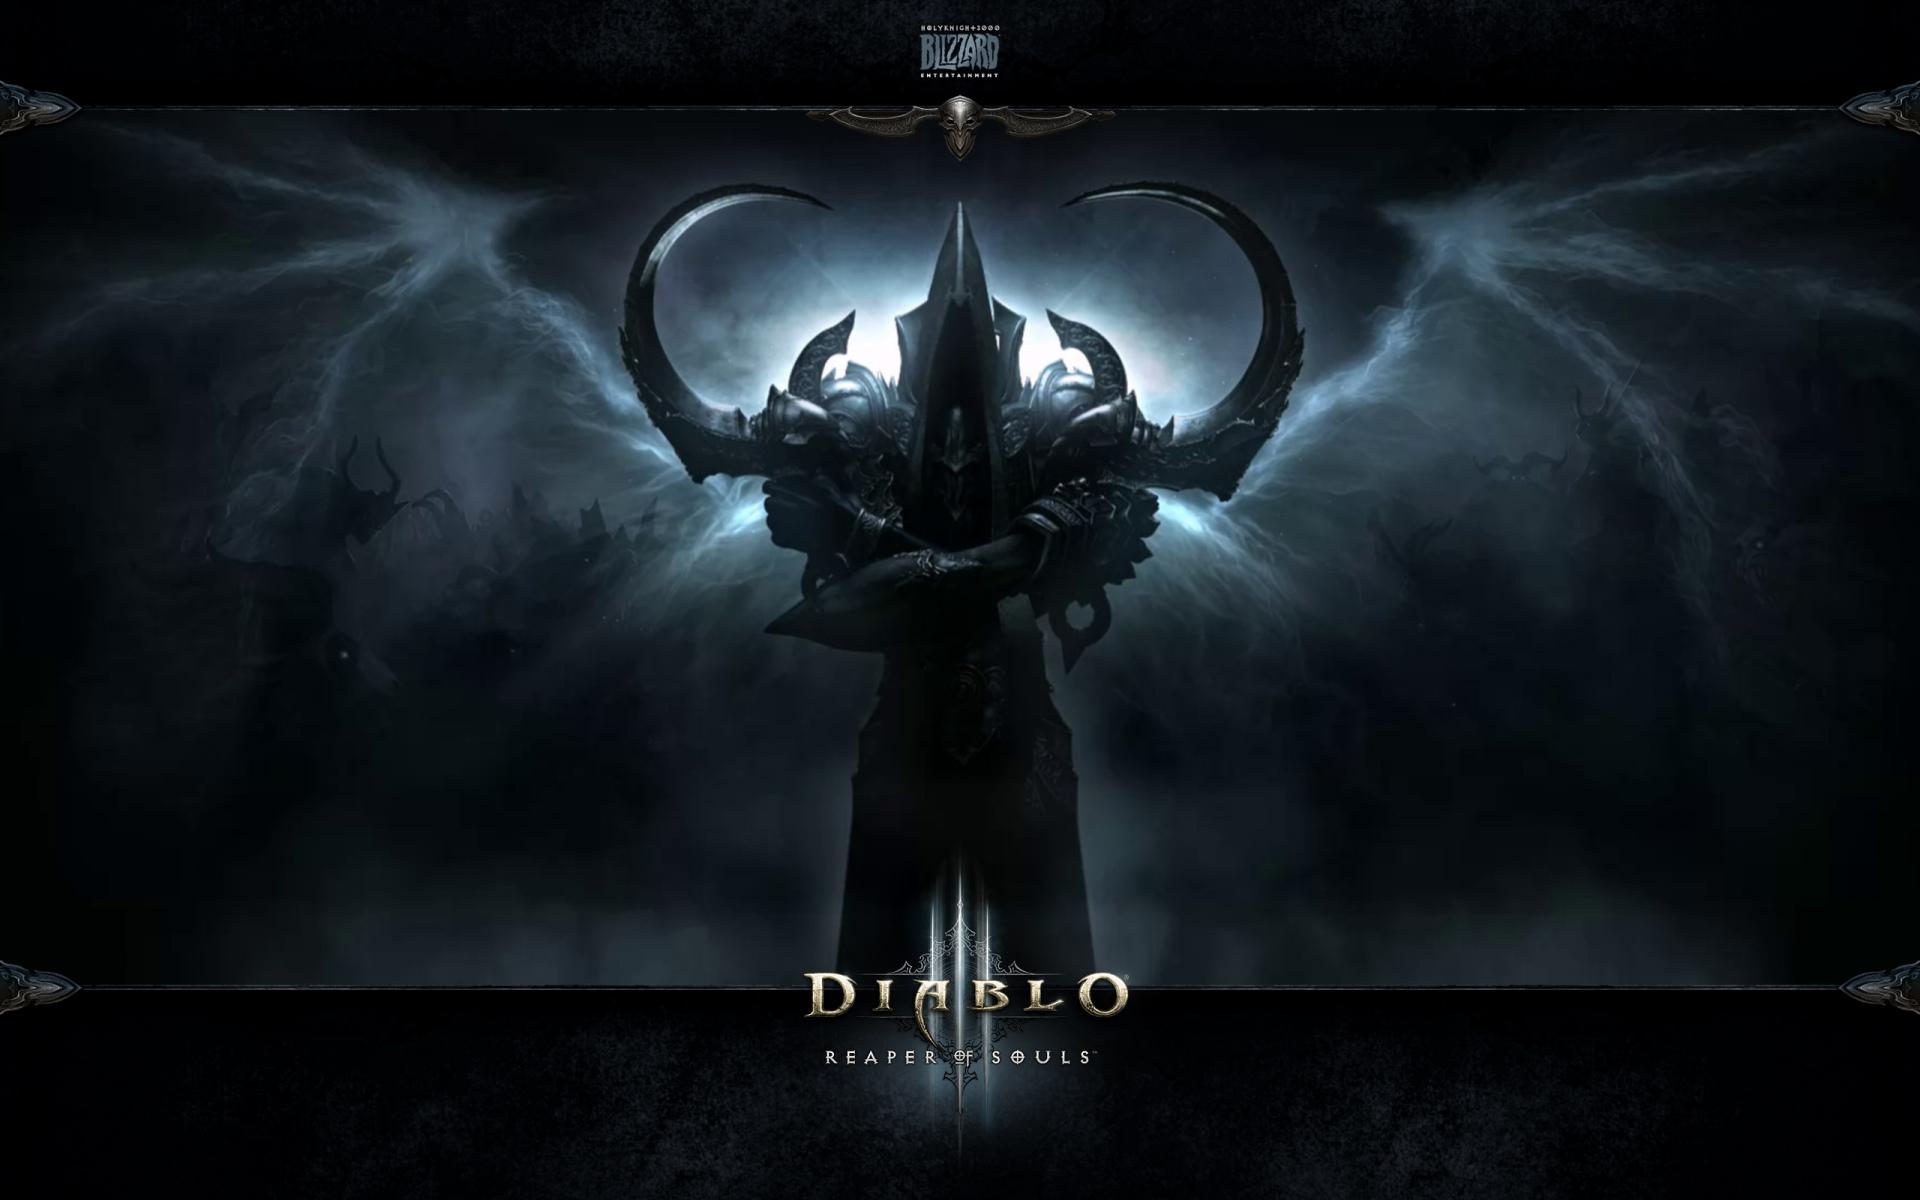 Diablo III Reaper Of Souls at 2048 x 2048 iPad size wallpapers HD quality